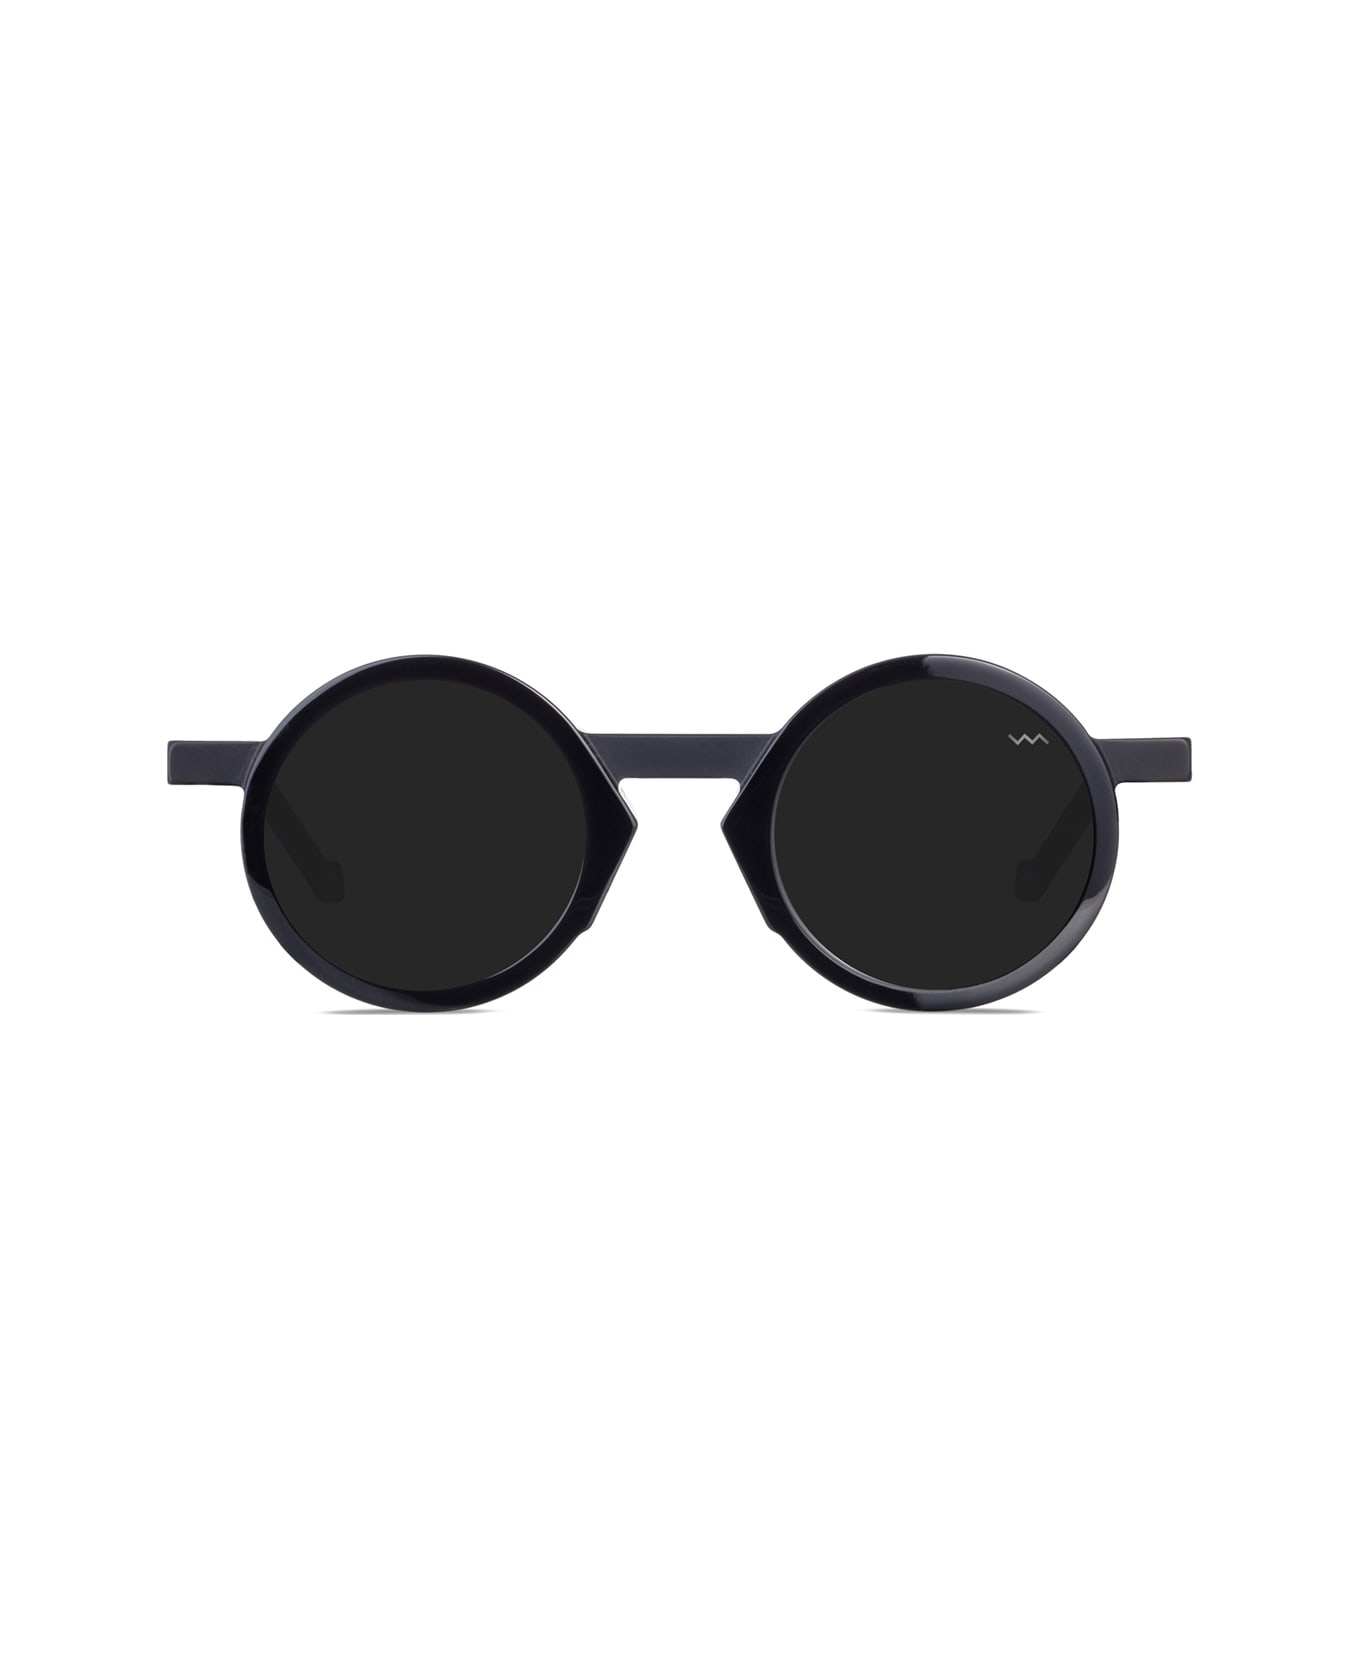 VAVA Wl0040 Black Sunglasses - Nero